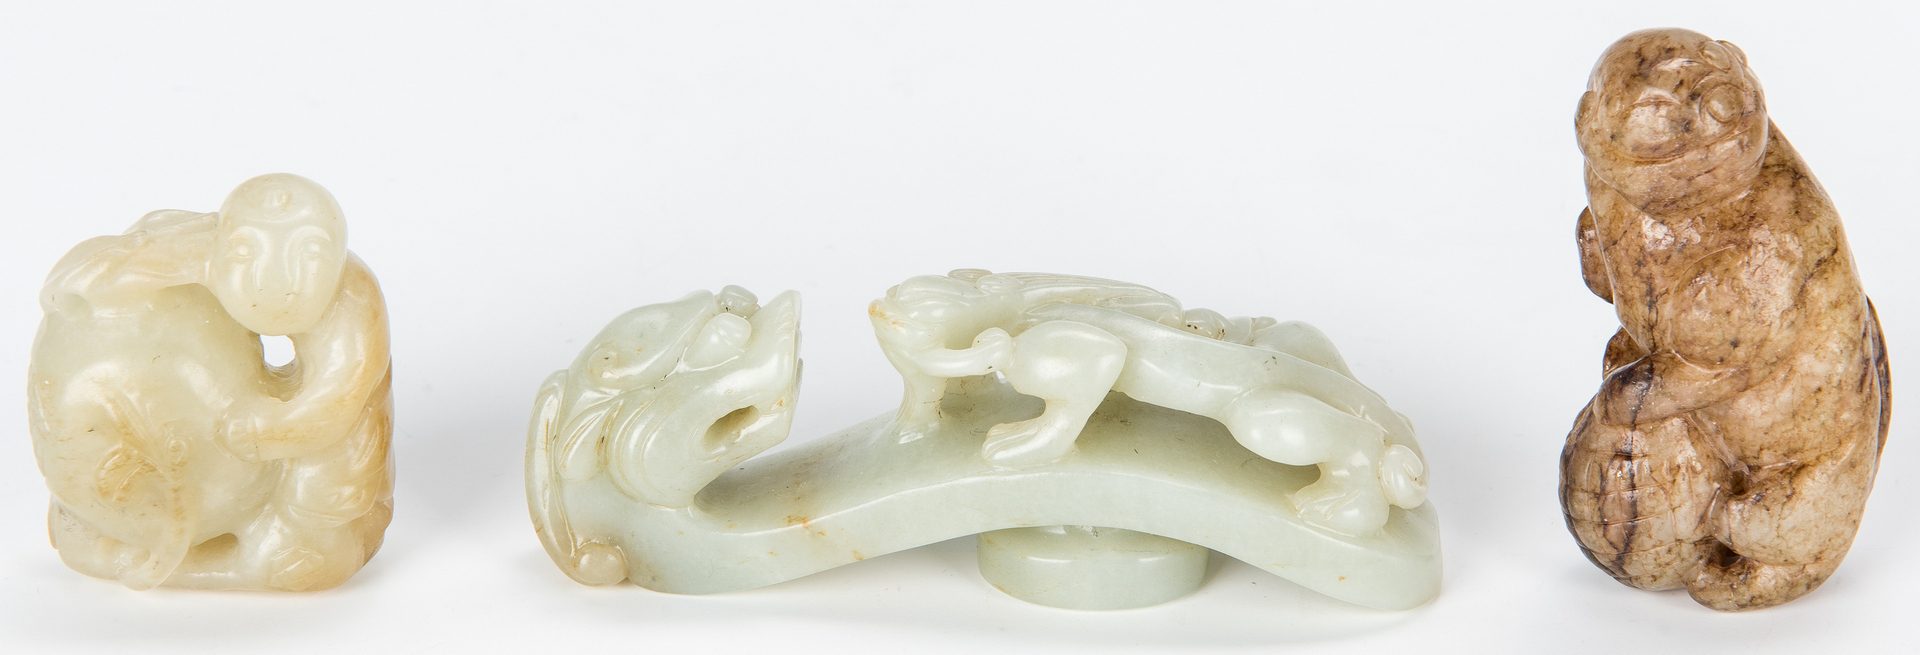 Lot 449: 5 Chinese Jade Figurals & 1 Jade Belt Hook